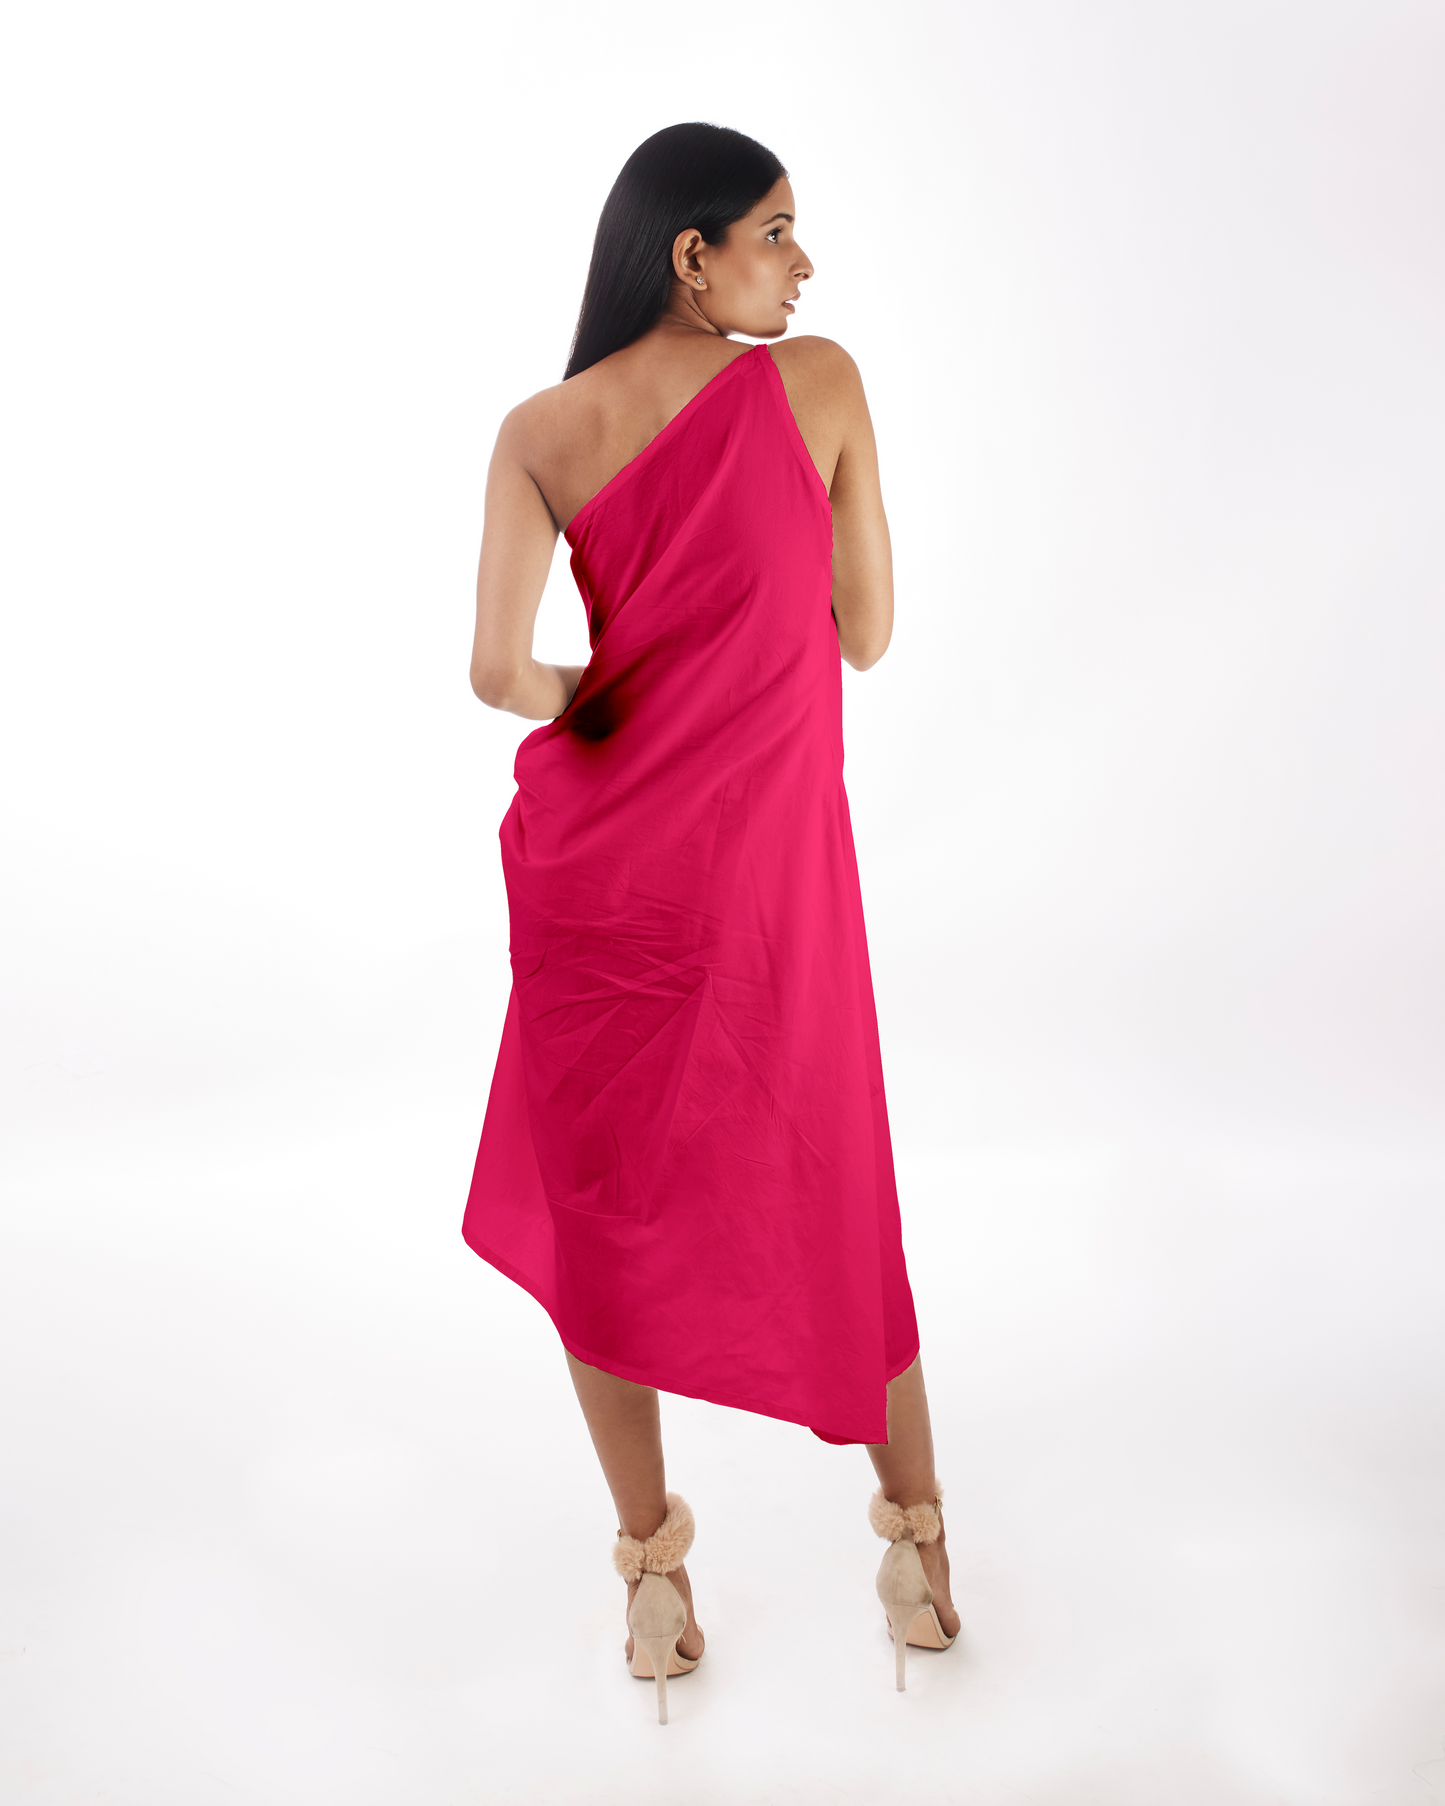 Pink One Shoulder Dress at Kamakhyaa by Kamakhyaa. This item is 100% pure cotton, Evening Wear, KKYSS, Natural, One Shoulder Dresses, Pink, Regular Fit, Solids, Summer Sutra, Womenswear